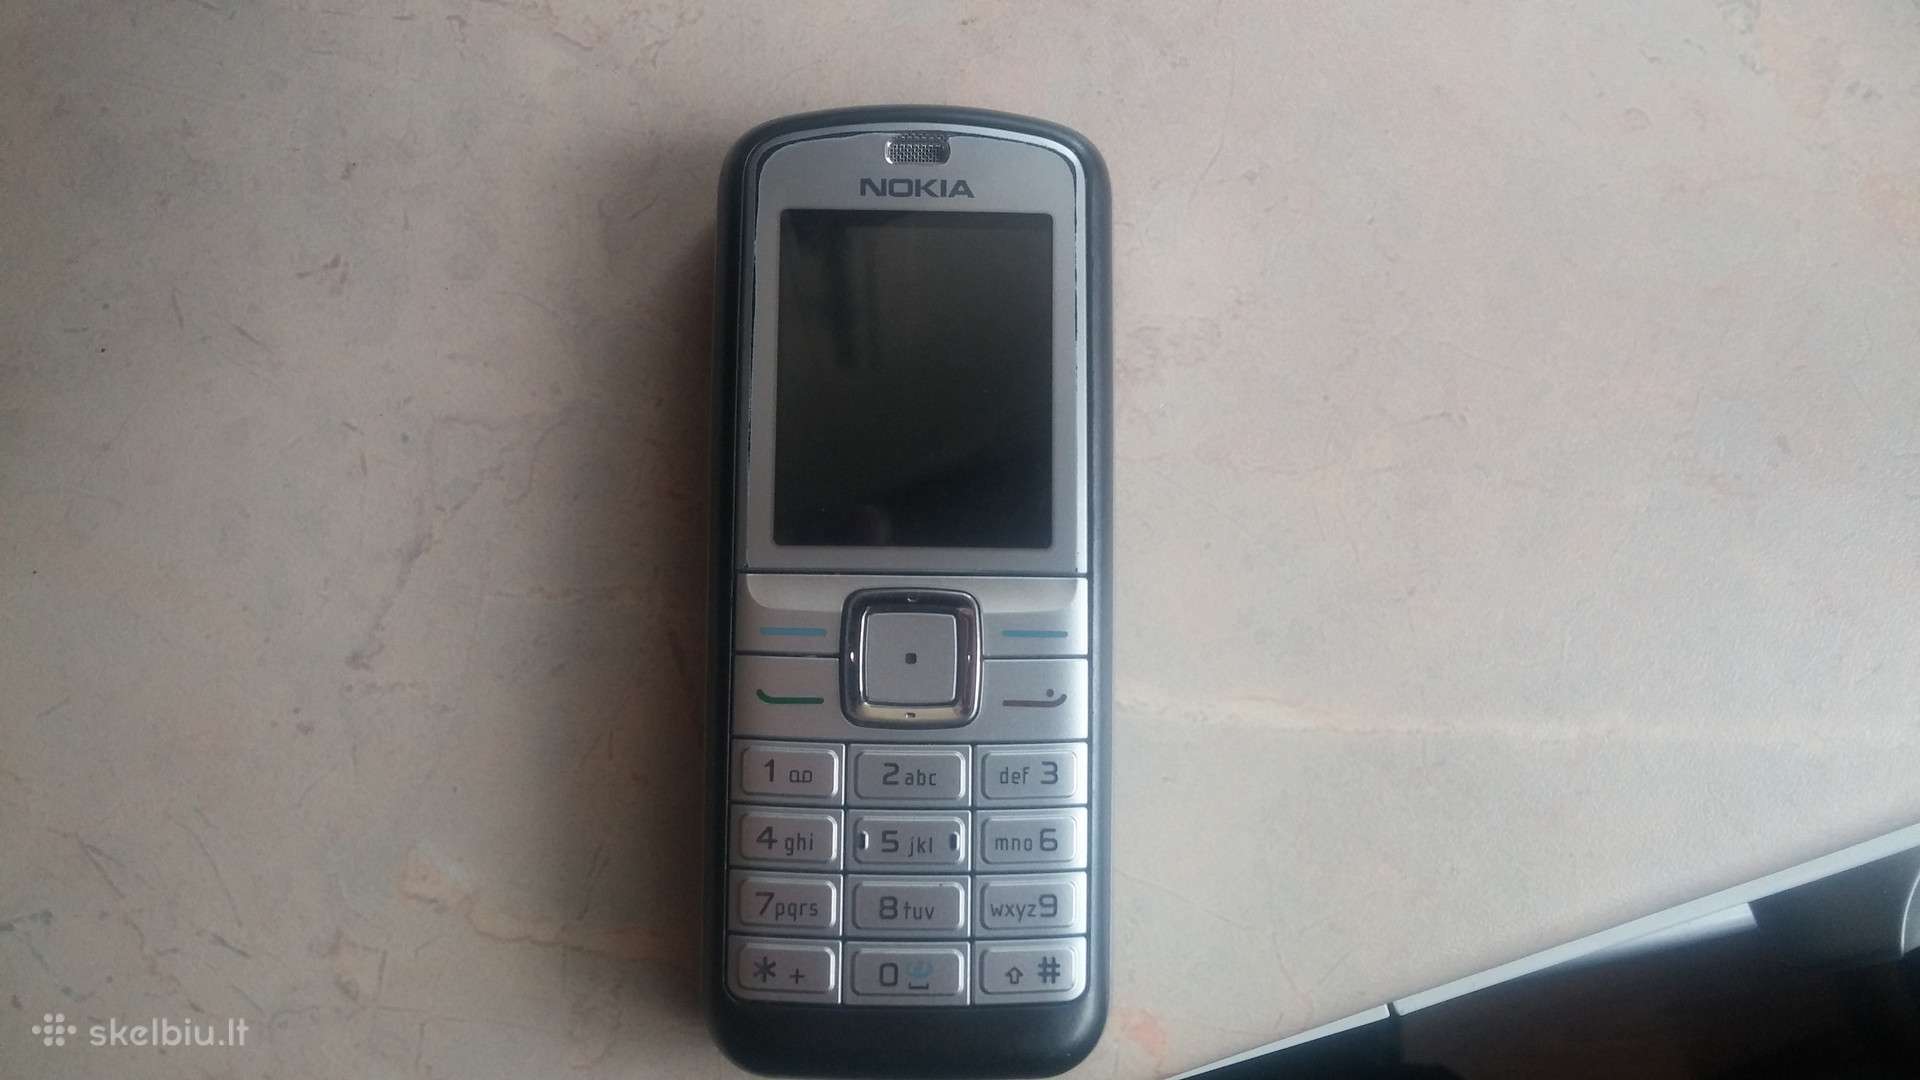 Nokia 6070 - Skelbiu.lt